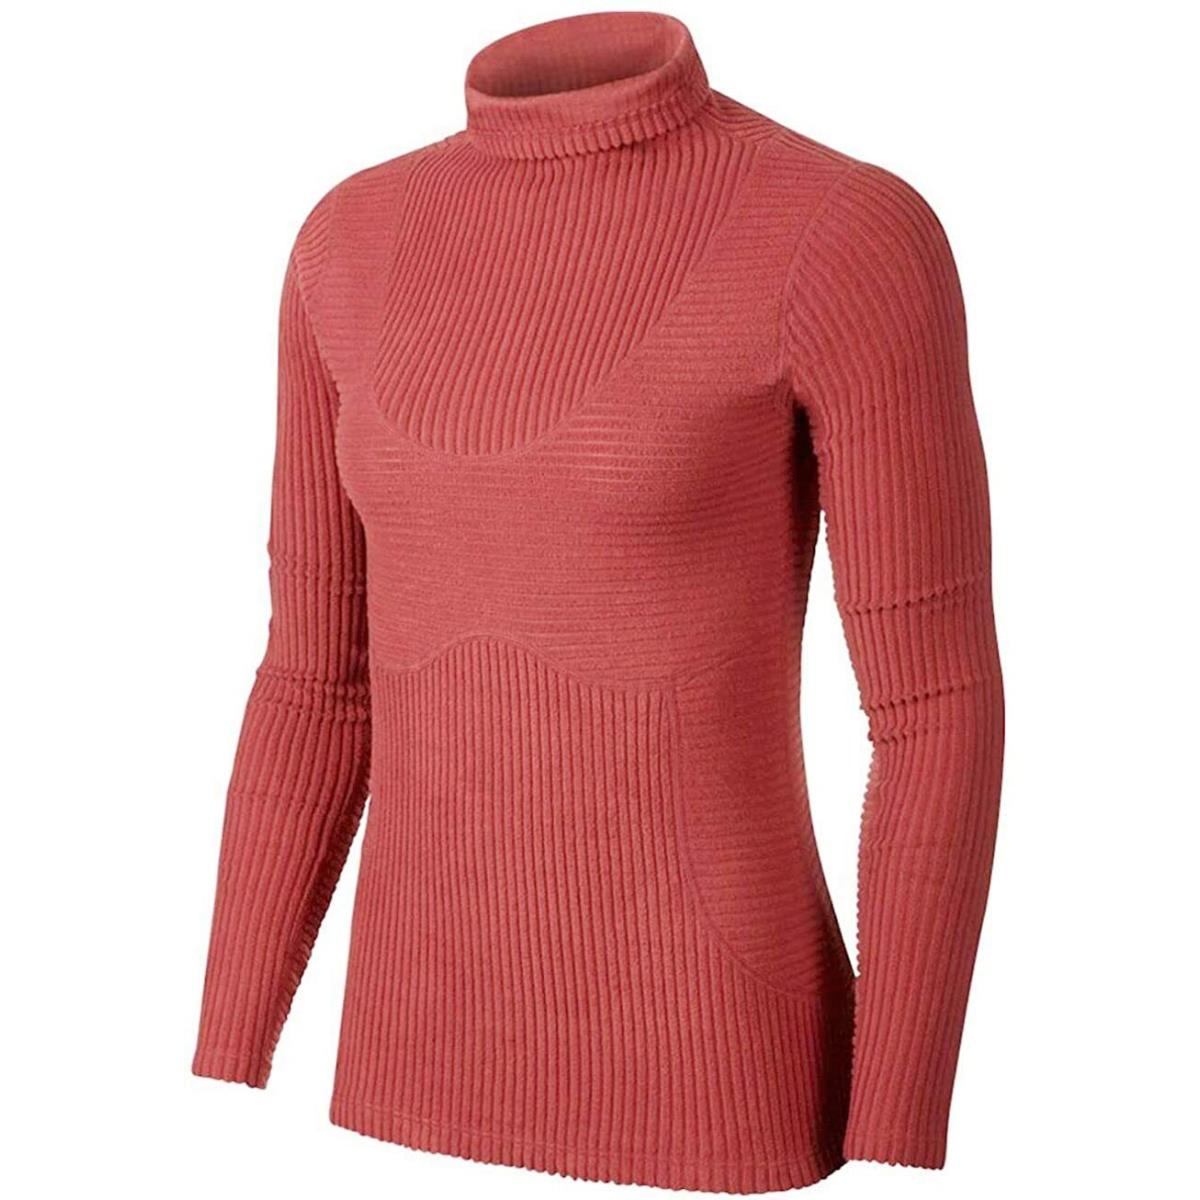 Nike Pro Hyperwarm Shirts Tops Womens Training Shirt Velour Top BV5558-661 Red